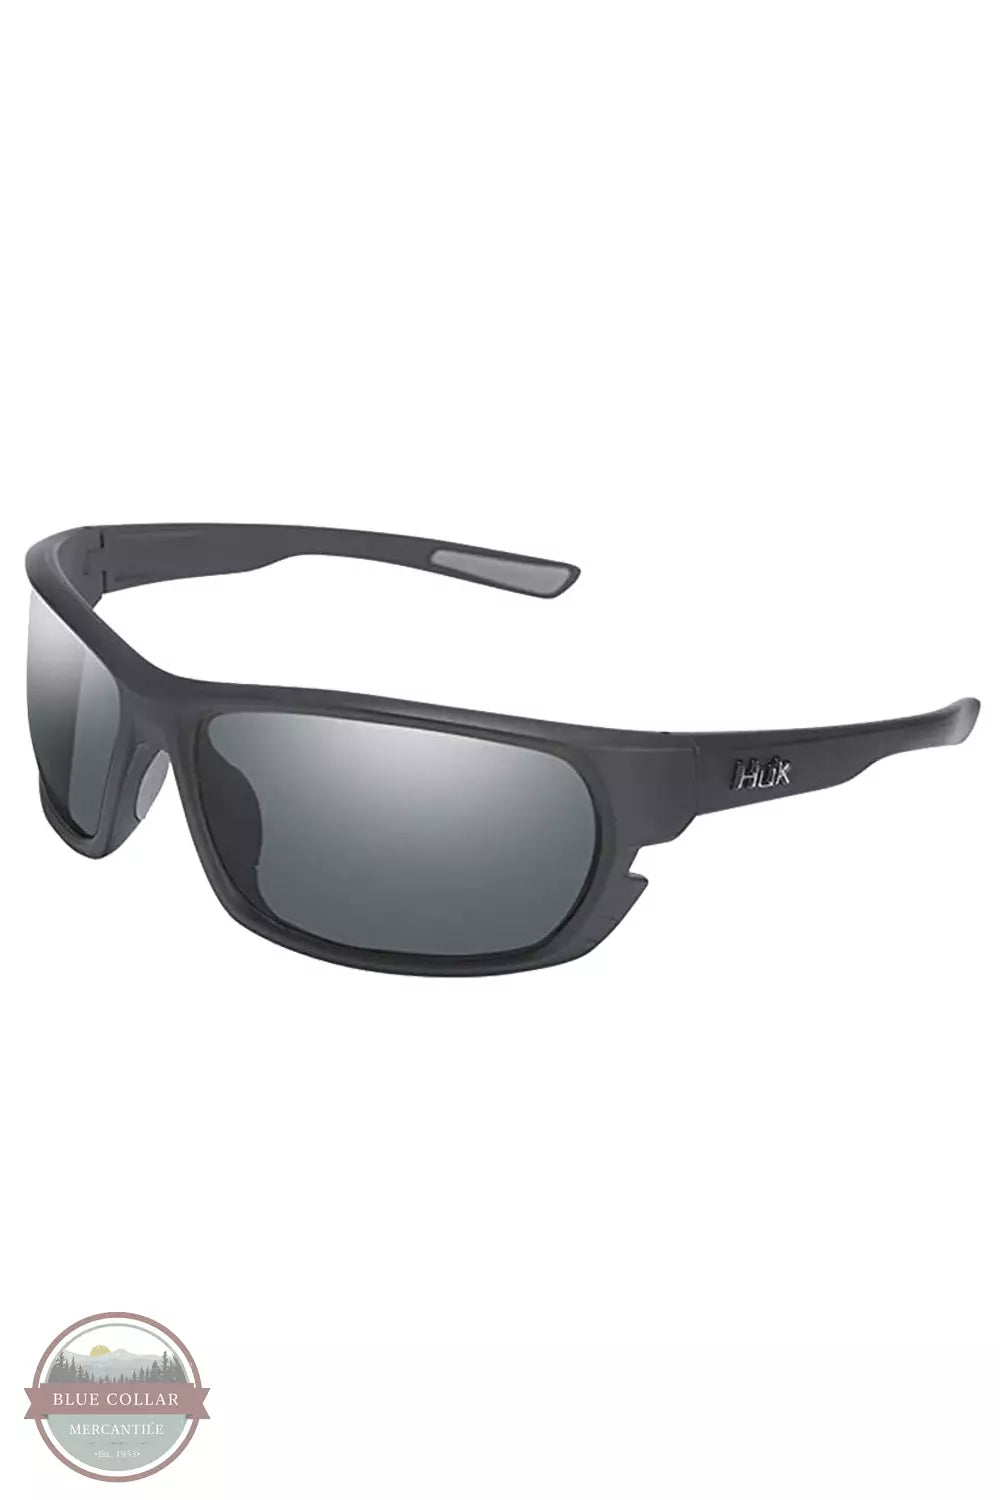 Huk E000024600101 Challenge Polarized Sunglasses in Matte Black Frame / Gray Lens Profile View